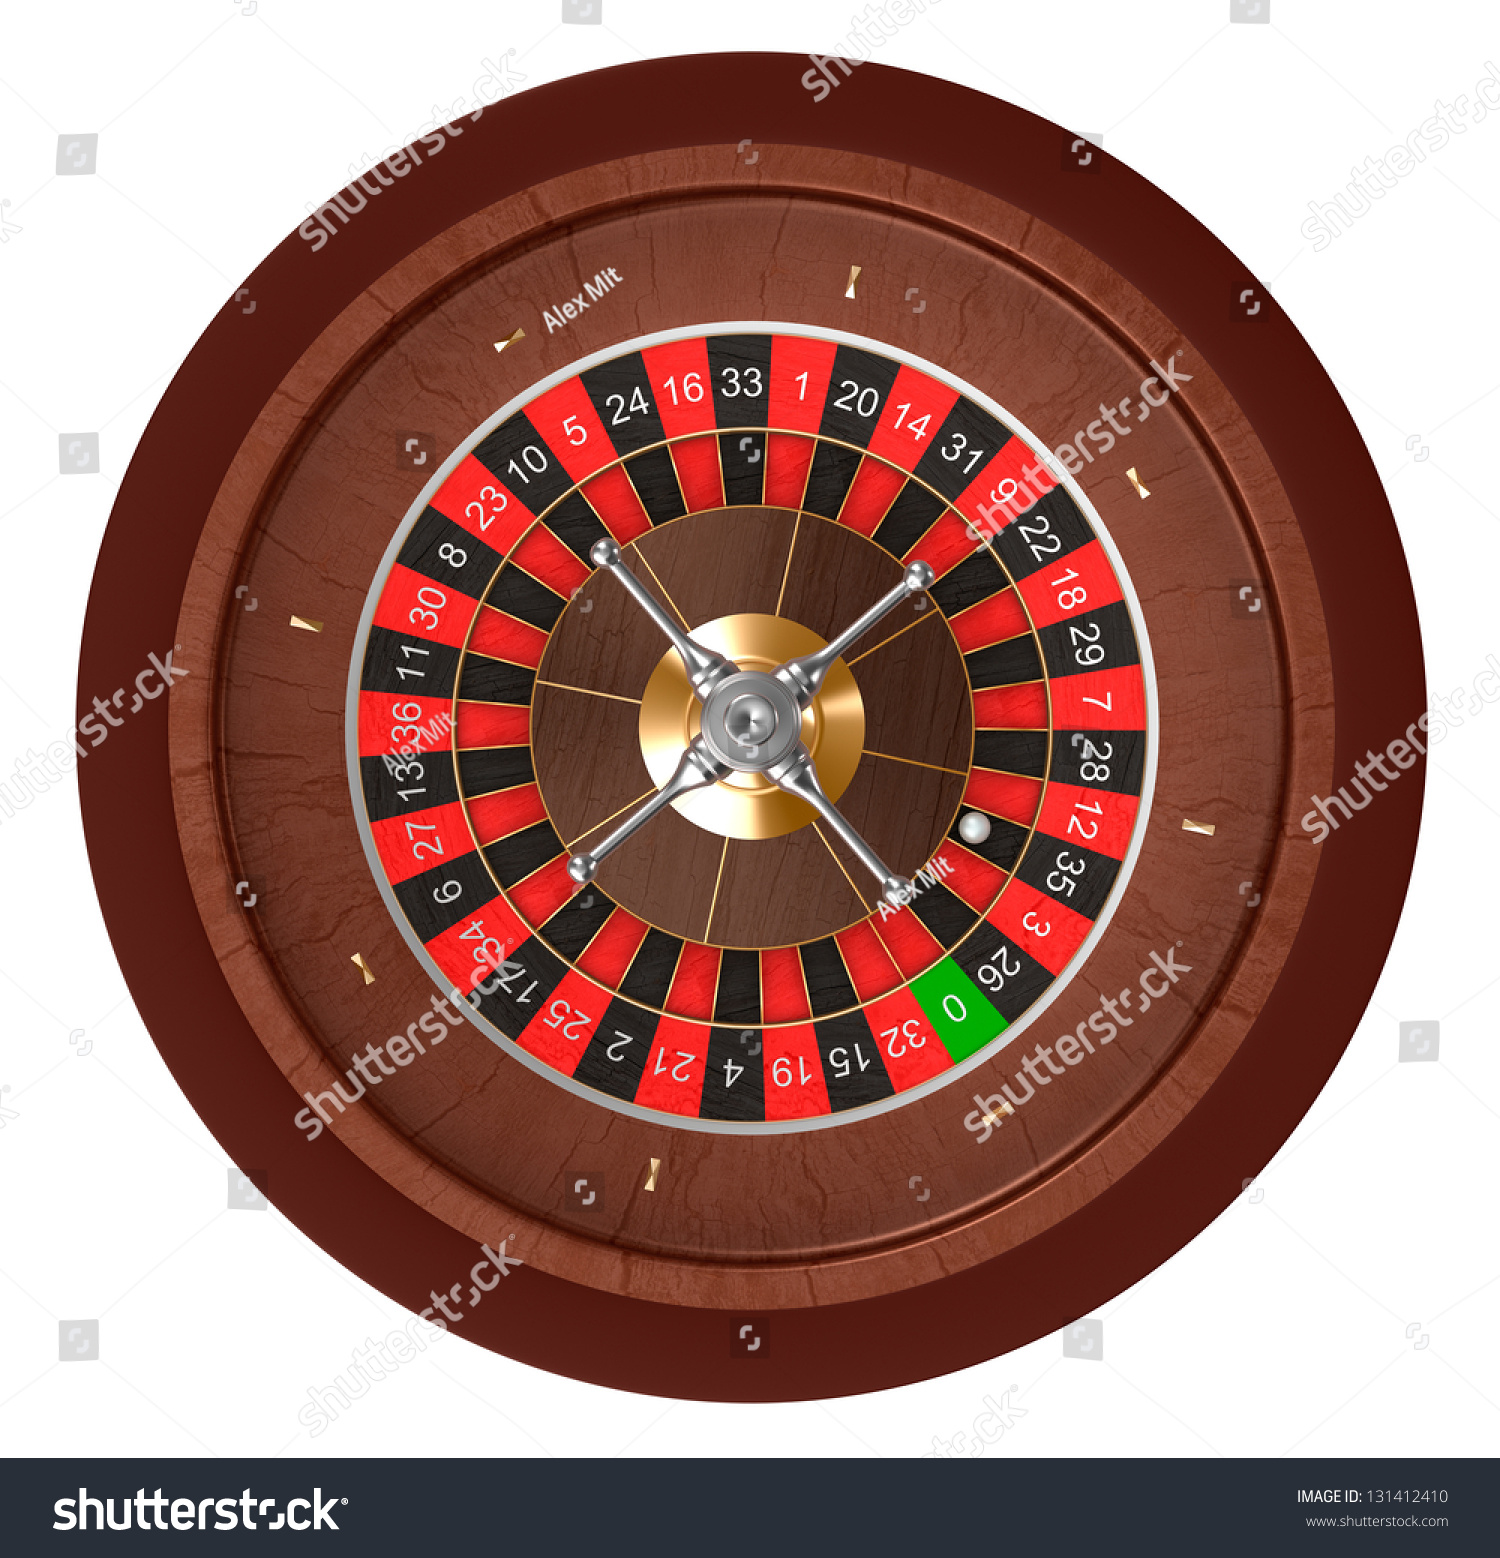 Best Roulette Casinos